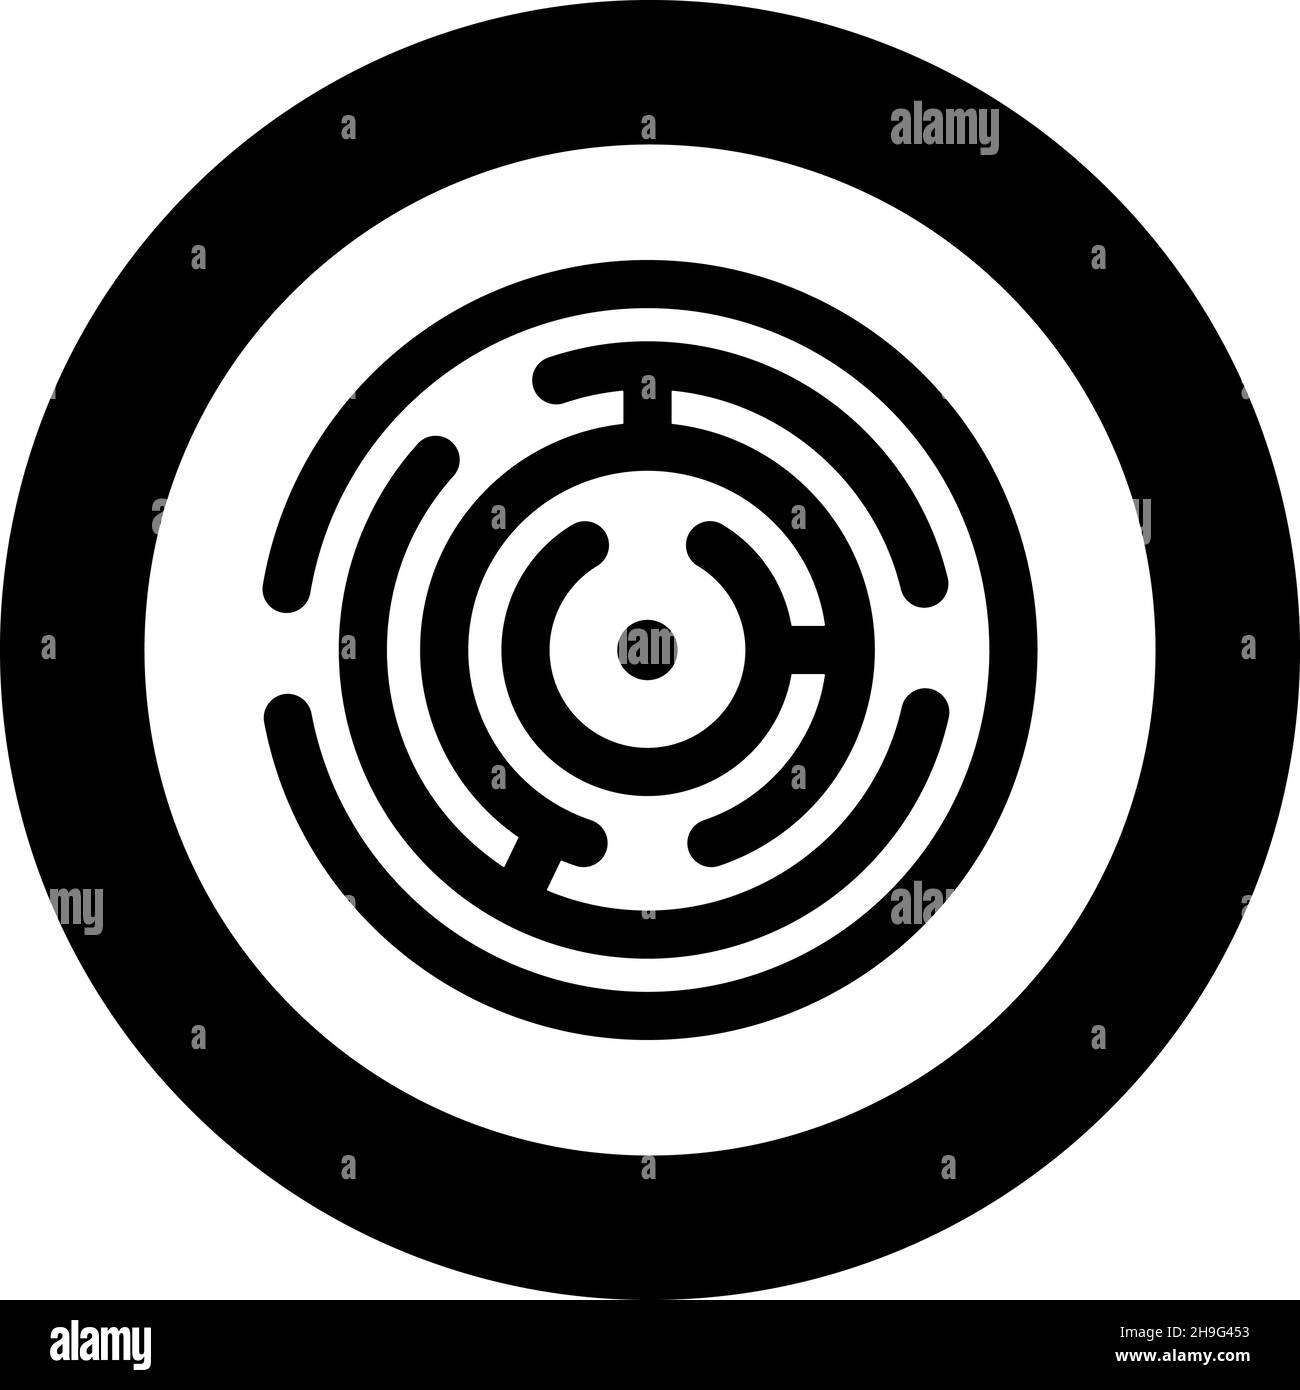 Runde Labyrinth-Symbol im Kreis Runde schwarze Farbe Vektor Illustration Bild solide Kontur Stil einfach Stock Vektor